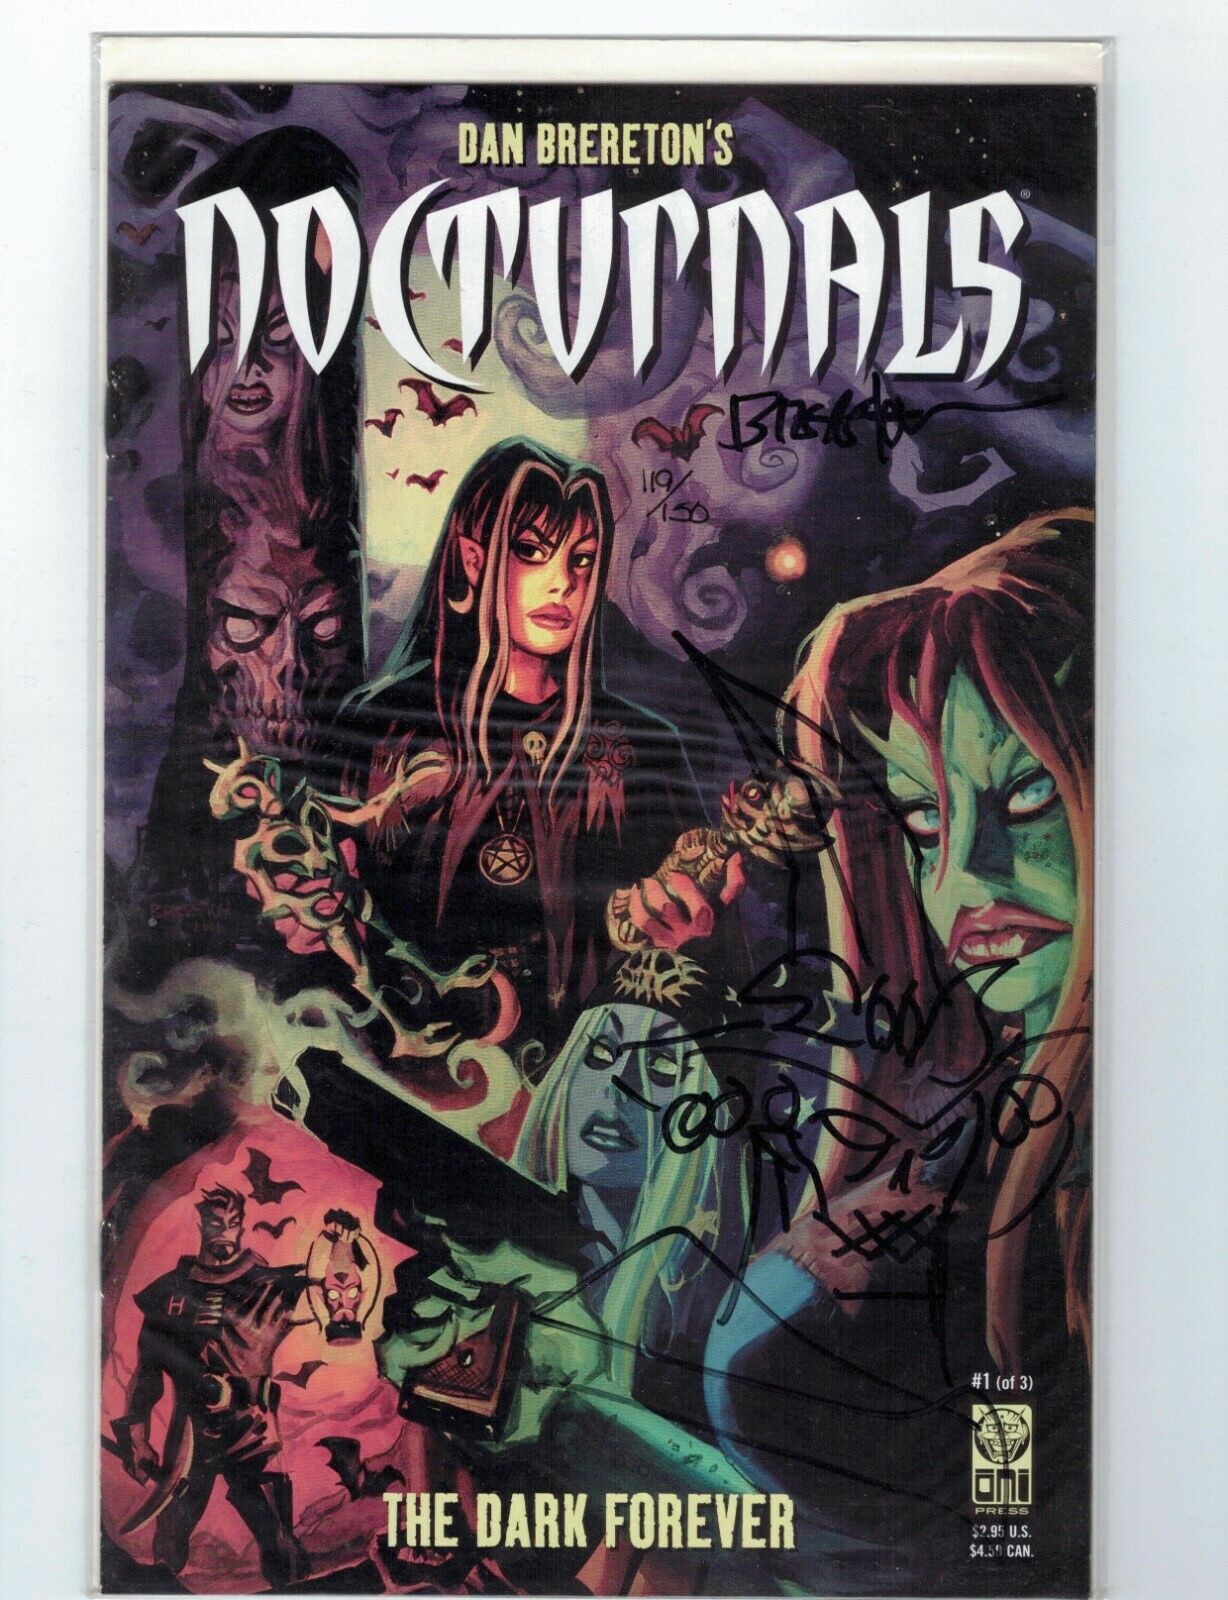 Nocturnals: the Dark Forever #1 VF/NM signed Dan Brereton + sketch COA (119/150)